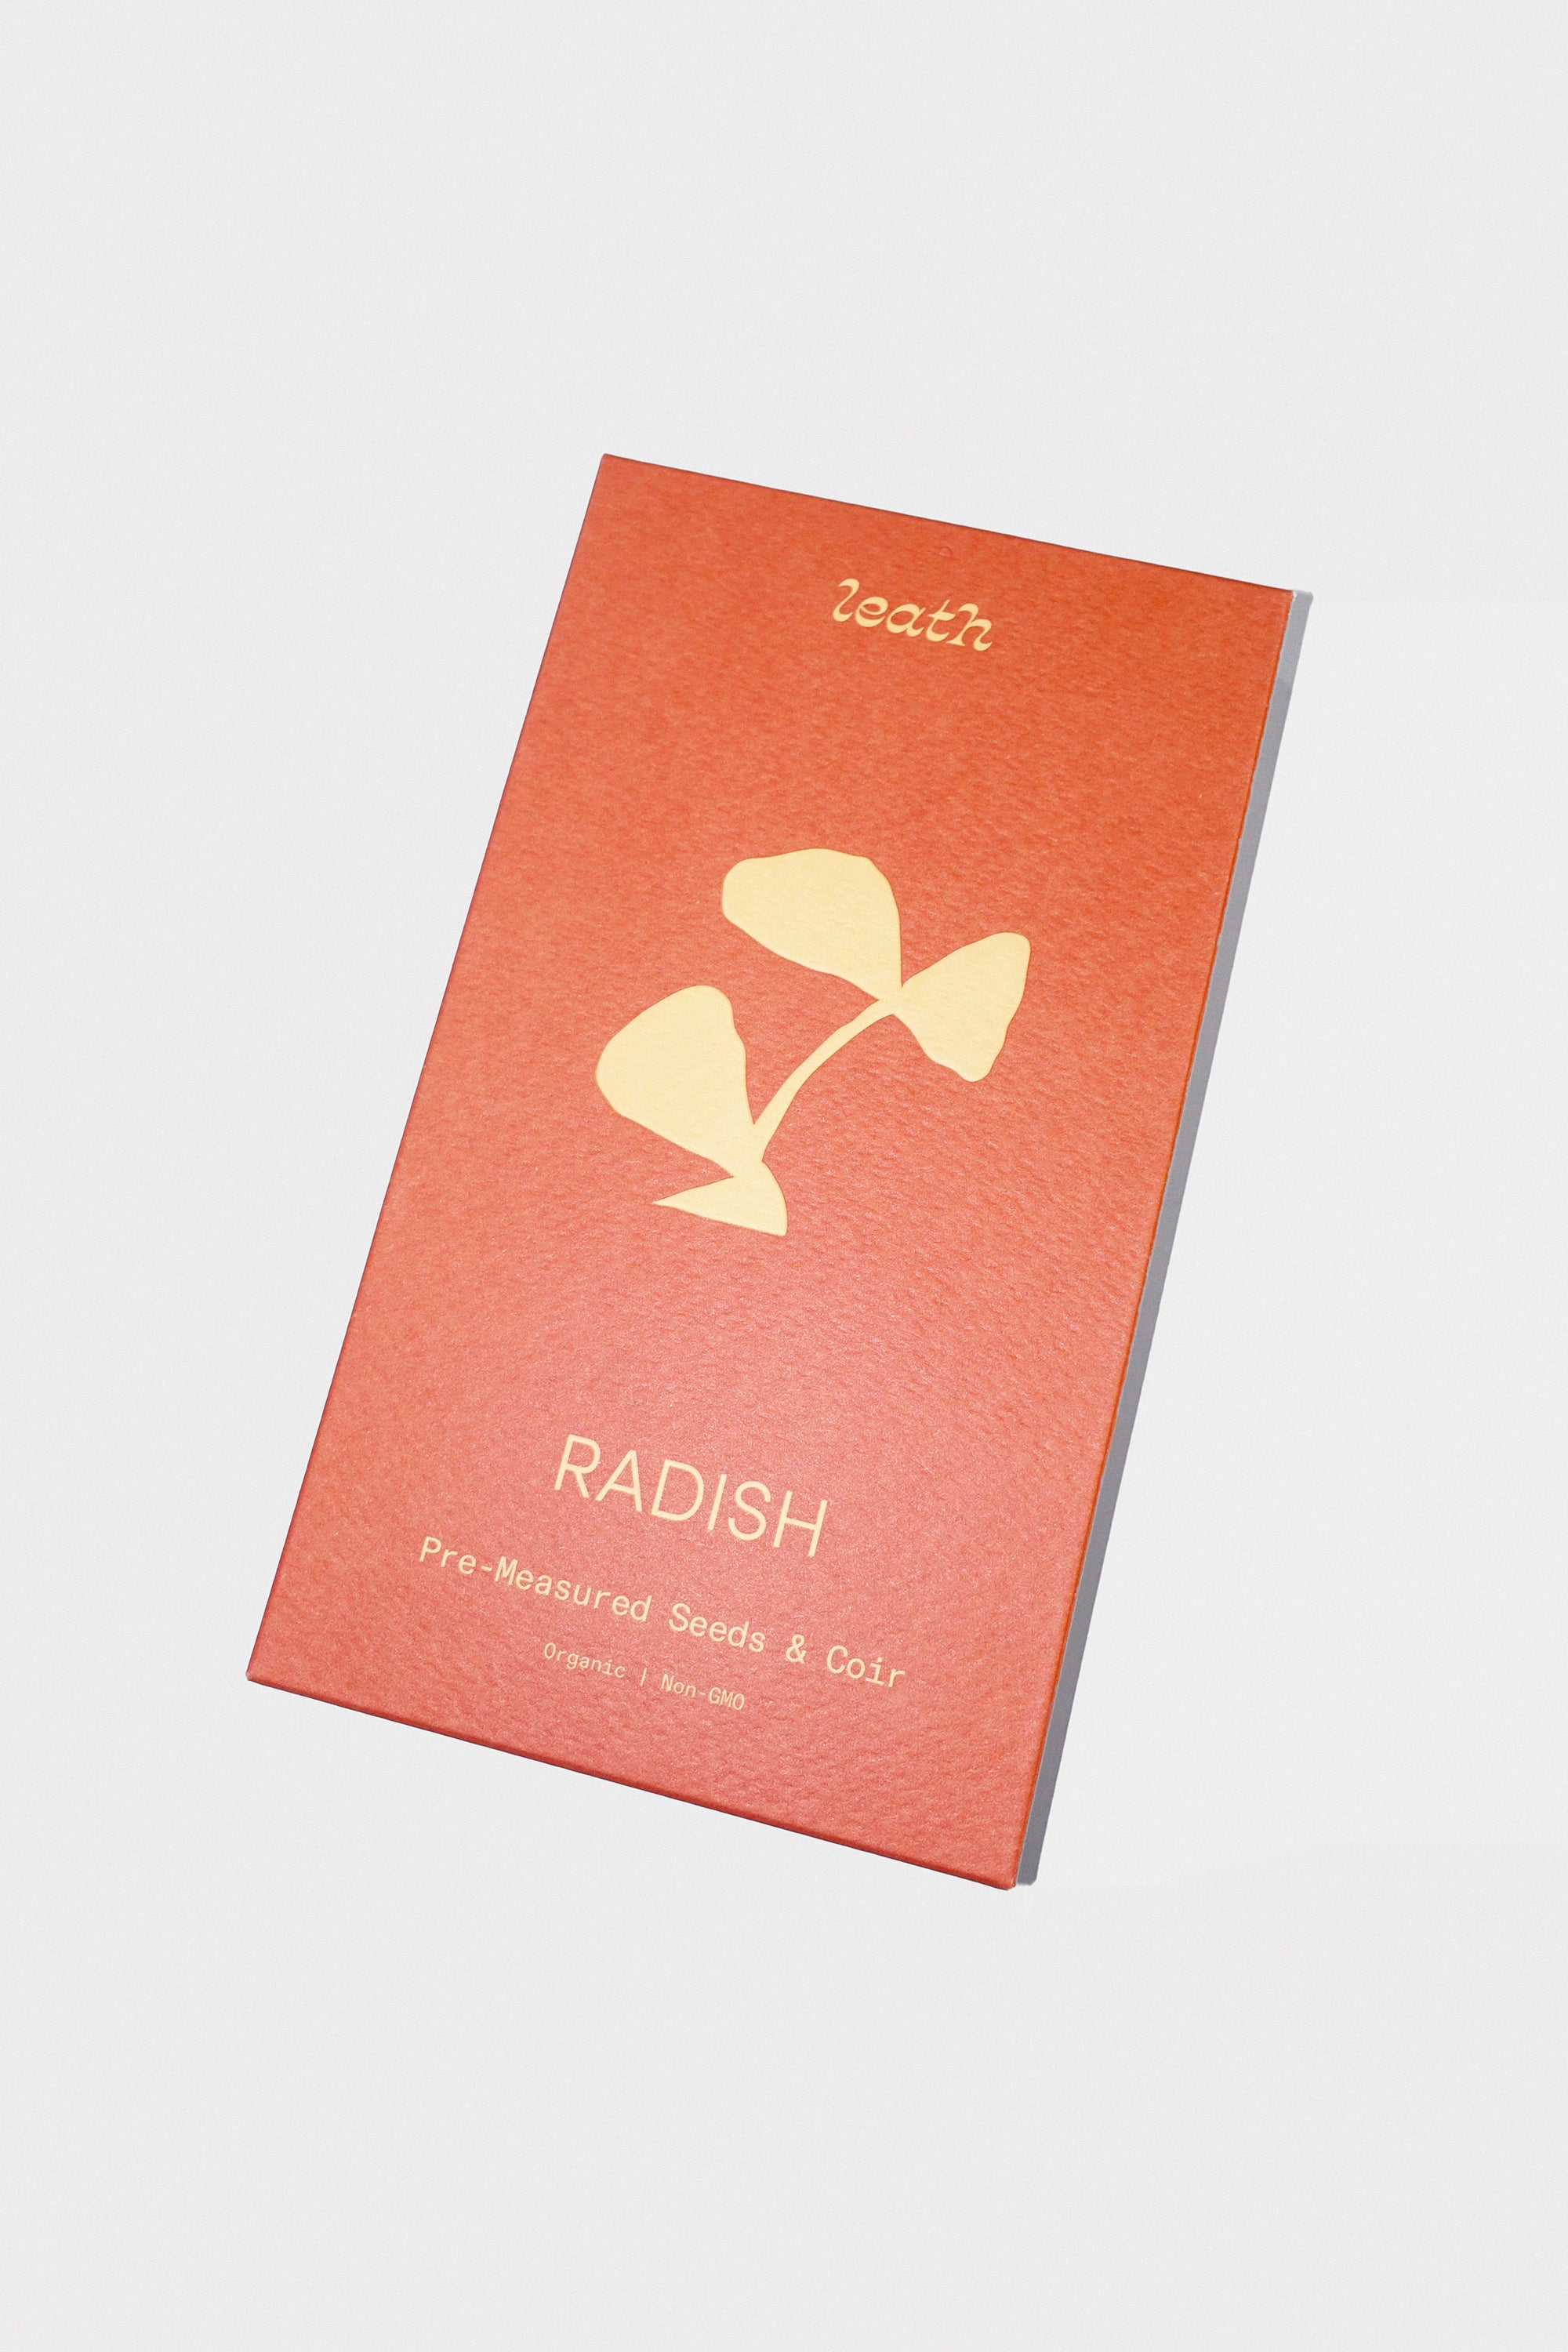 Radish: Pre-Measured Seeds & Coir